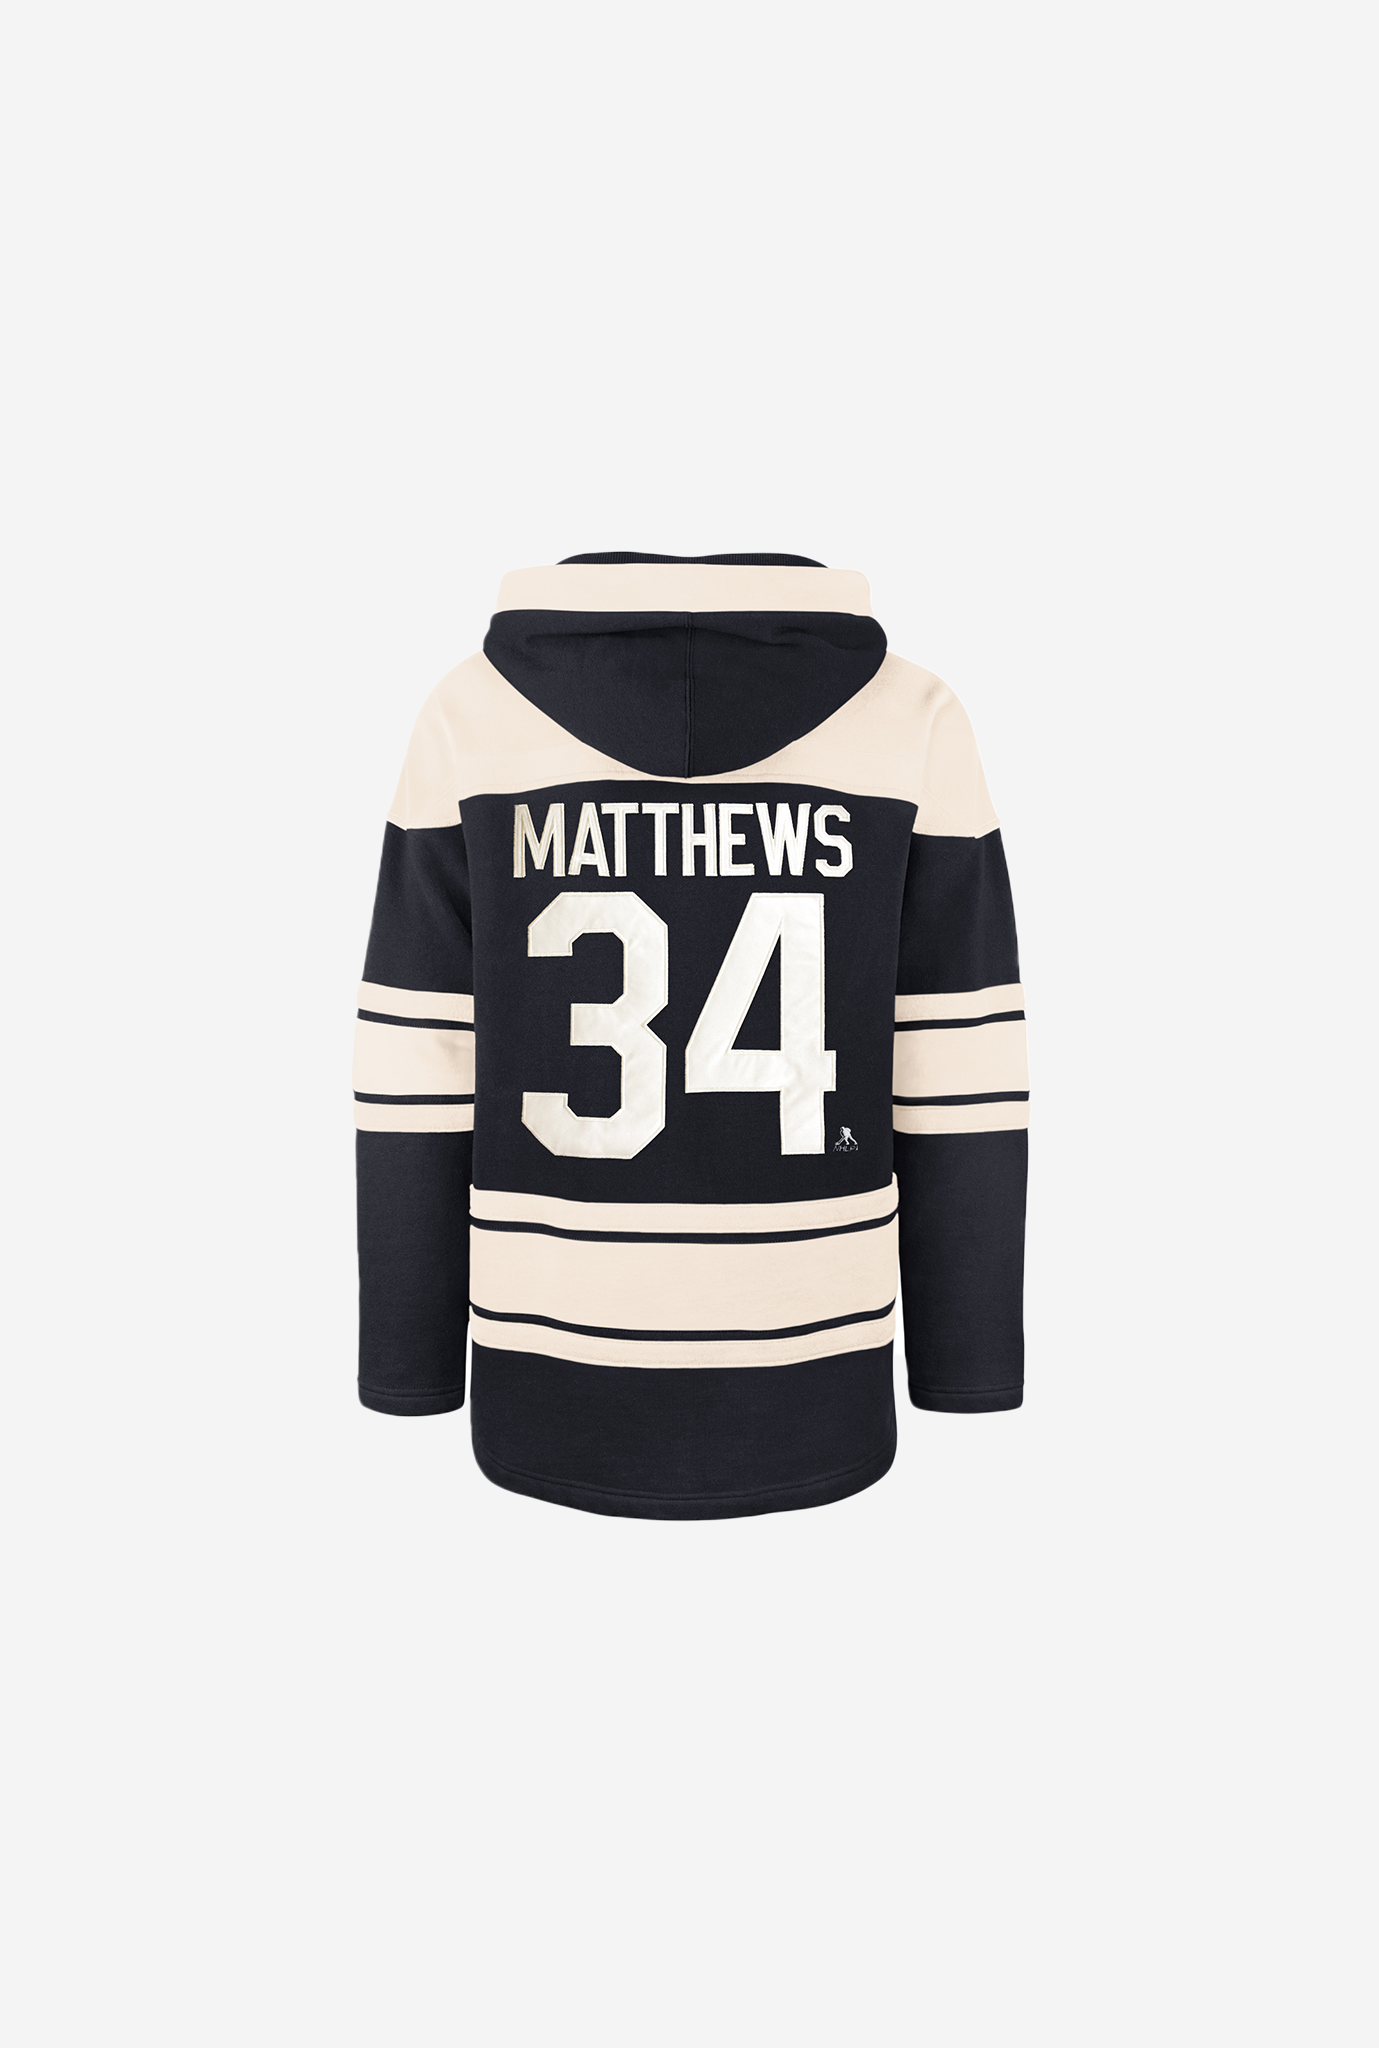 Toronto Maple Leafs Player Lacer - Auston Matthews